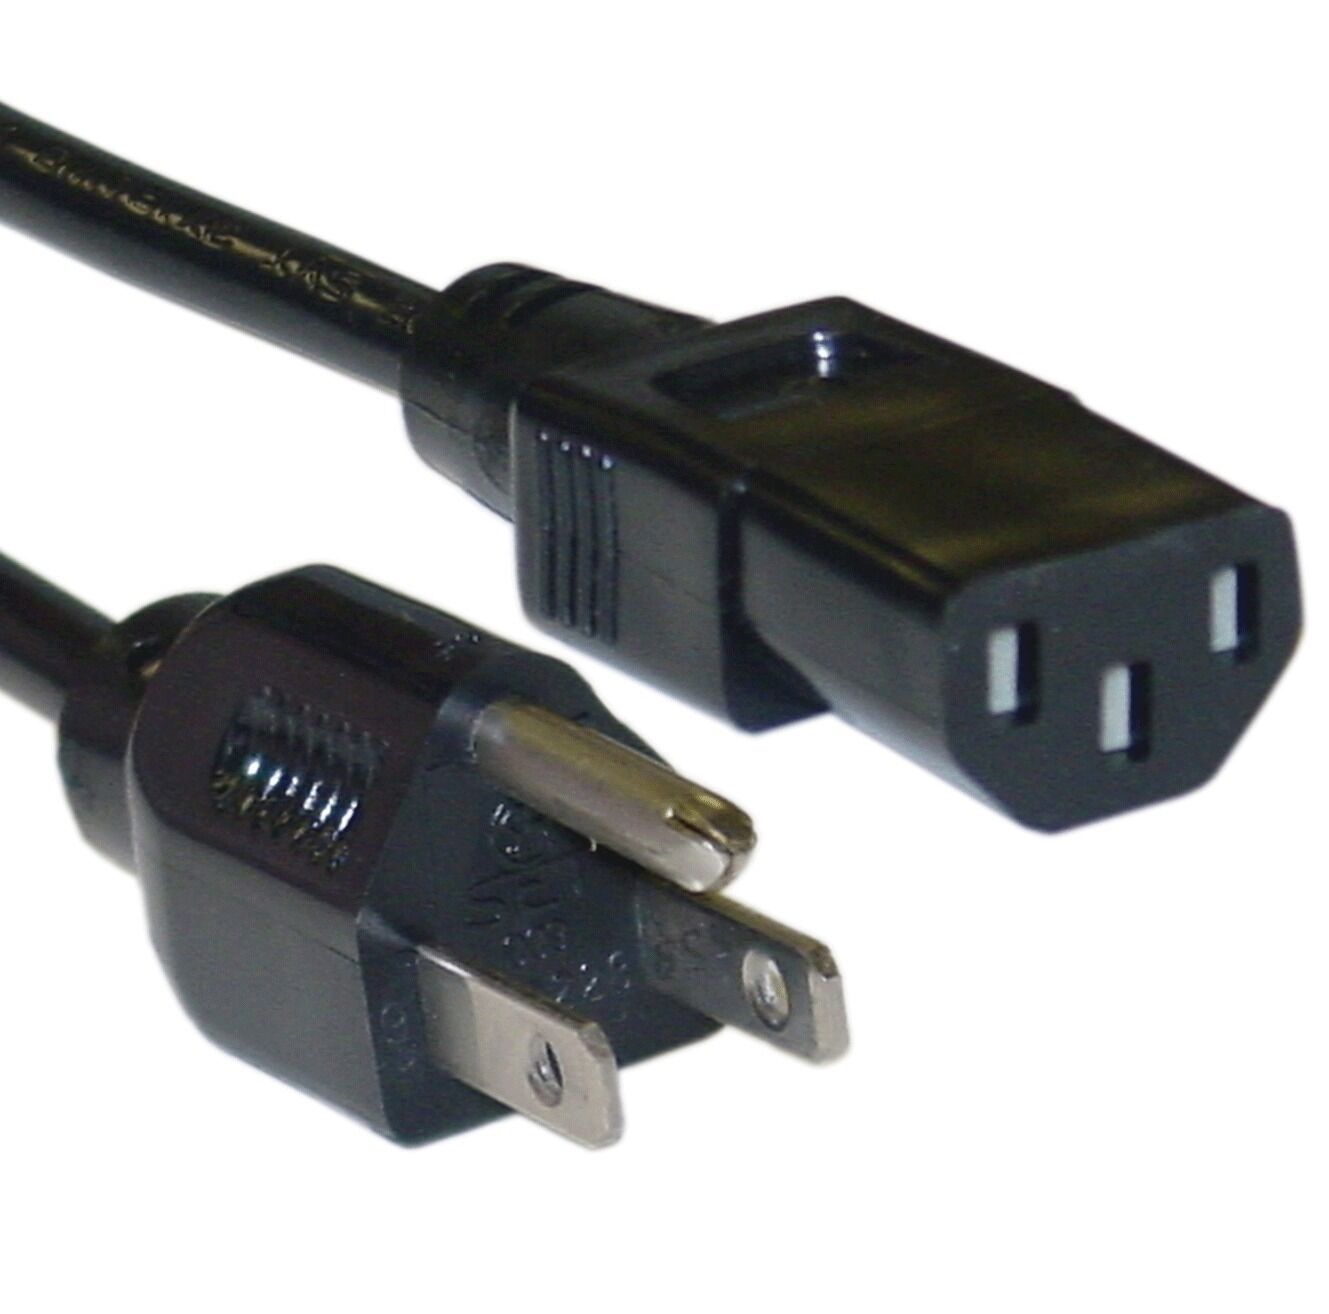 Standard 3 Prong Iec320c13 To Nema5-15p Universal Appliance Computer Power Cord